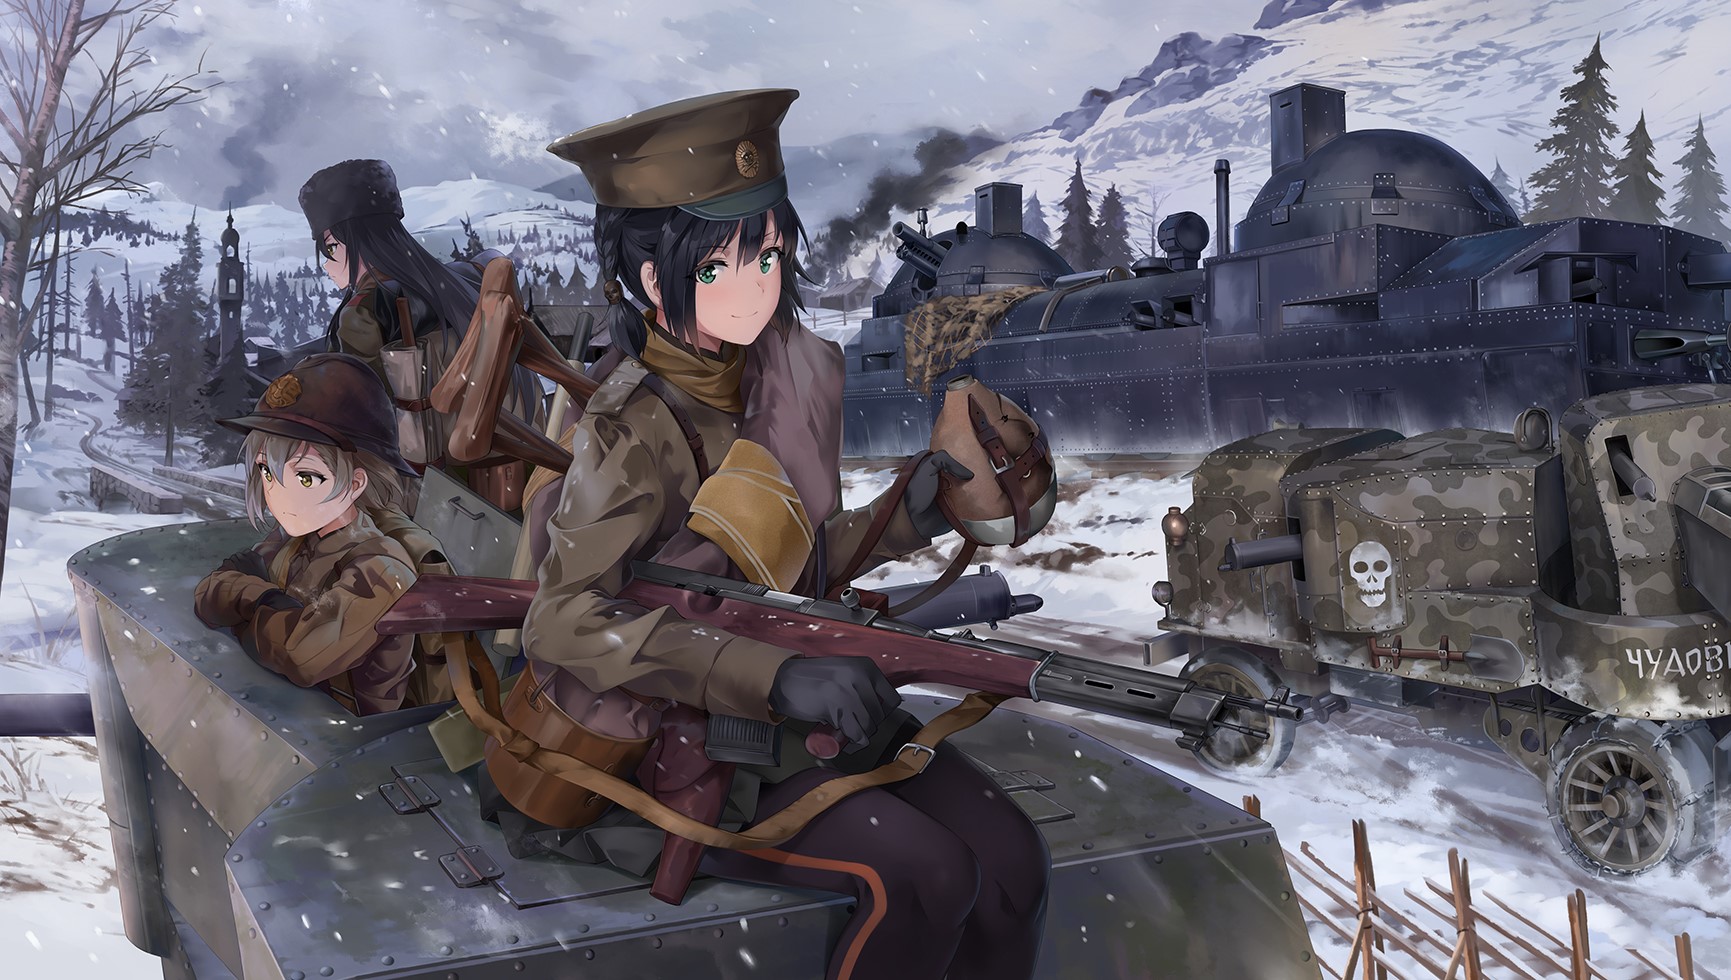 Military uniform anime girls war